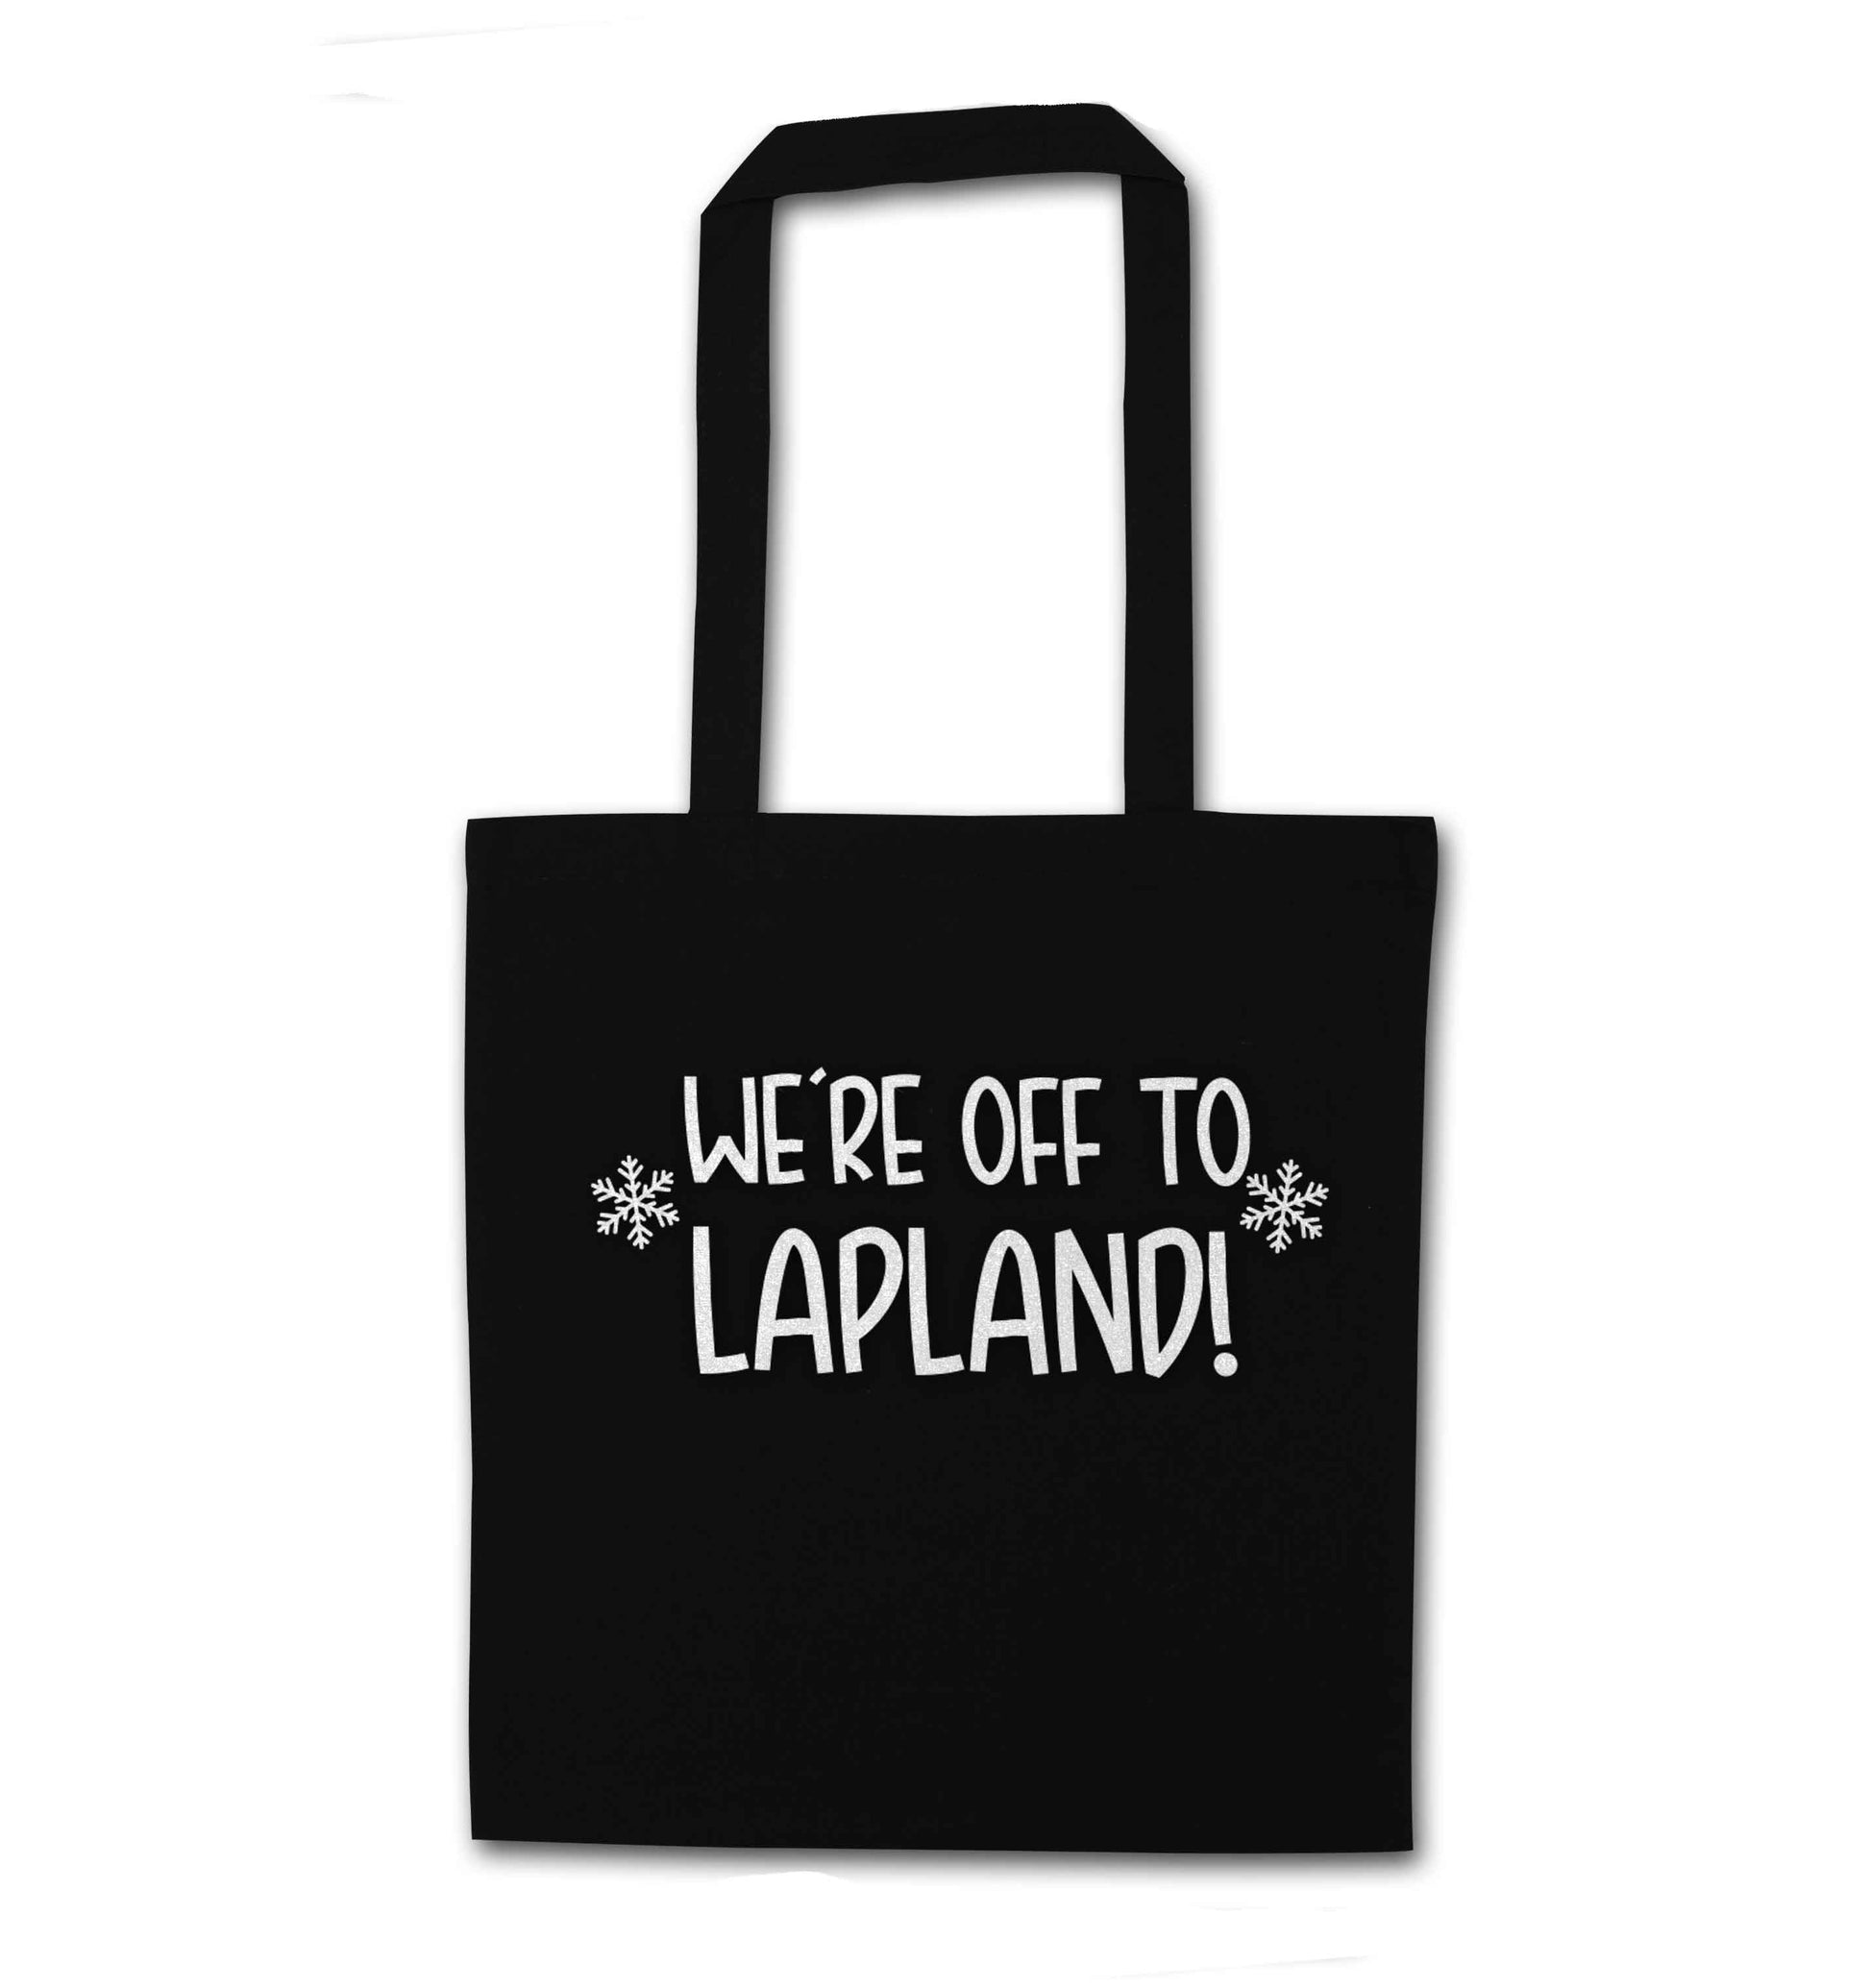 We're off to Lapland black tote bag